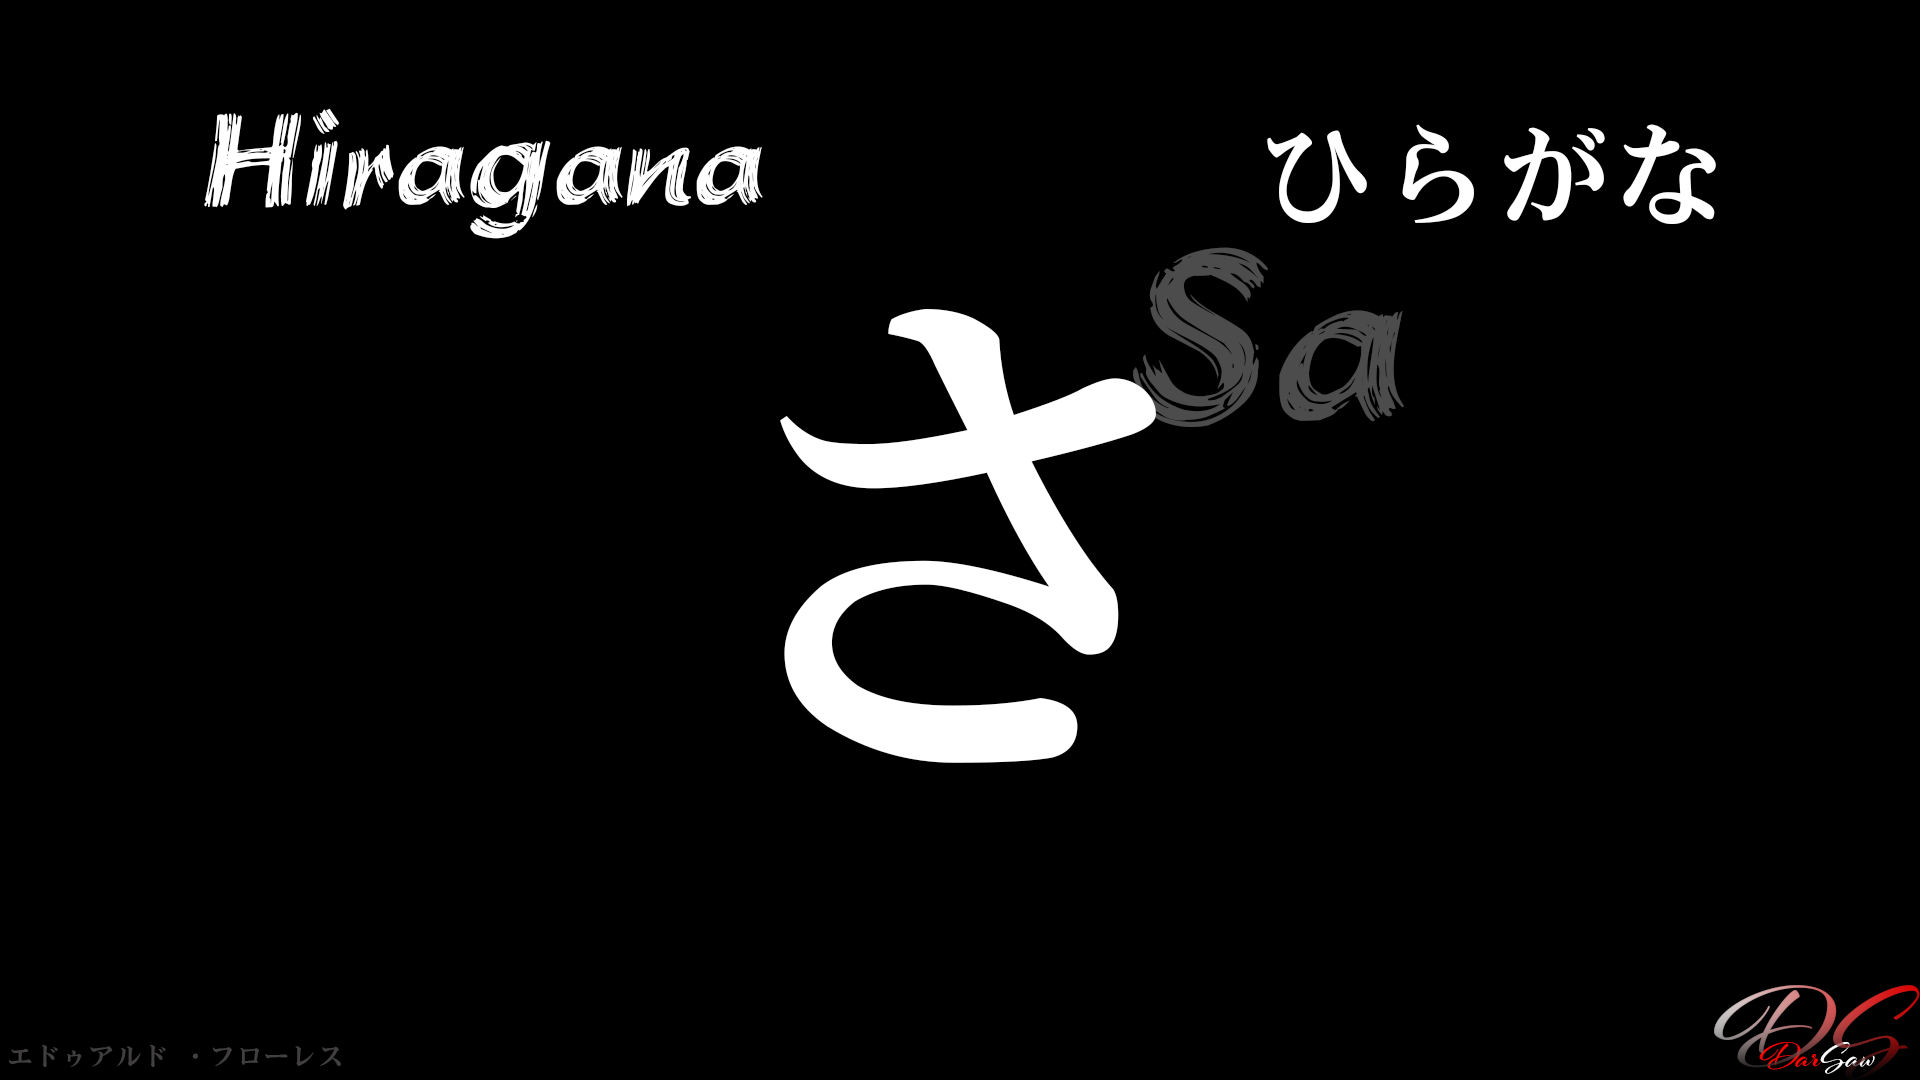 General 1920x1080 hiragana digital art simple background watermarked